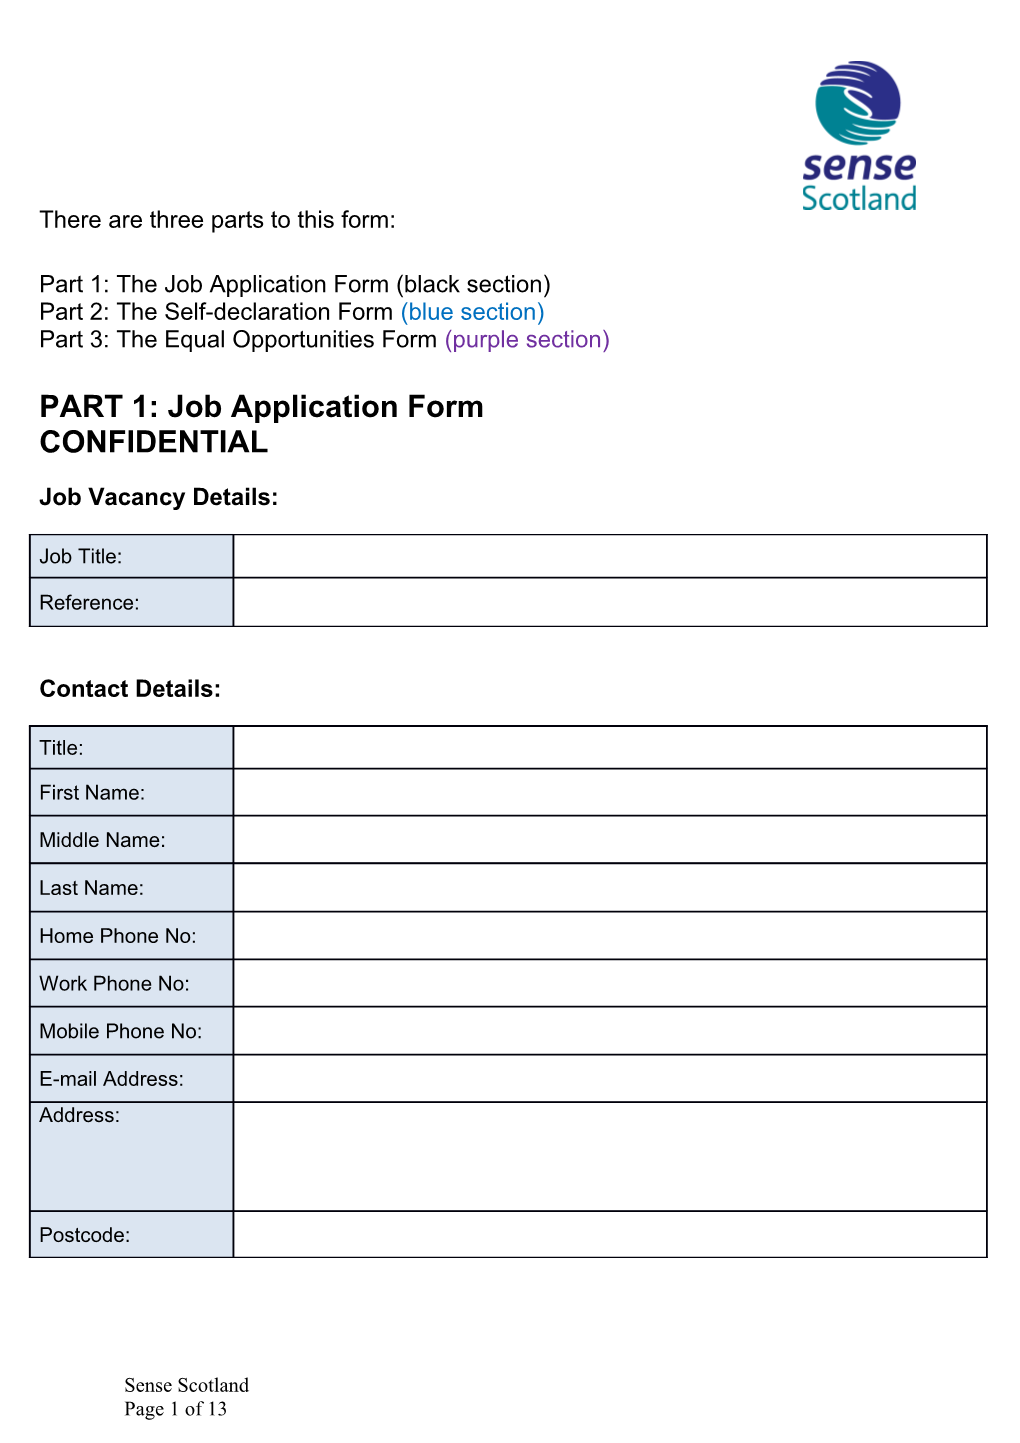 Part 1: the Job Application Form (Black Section)